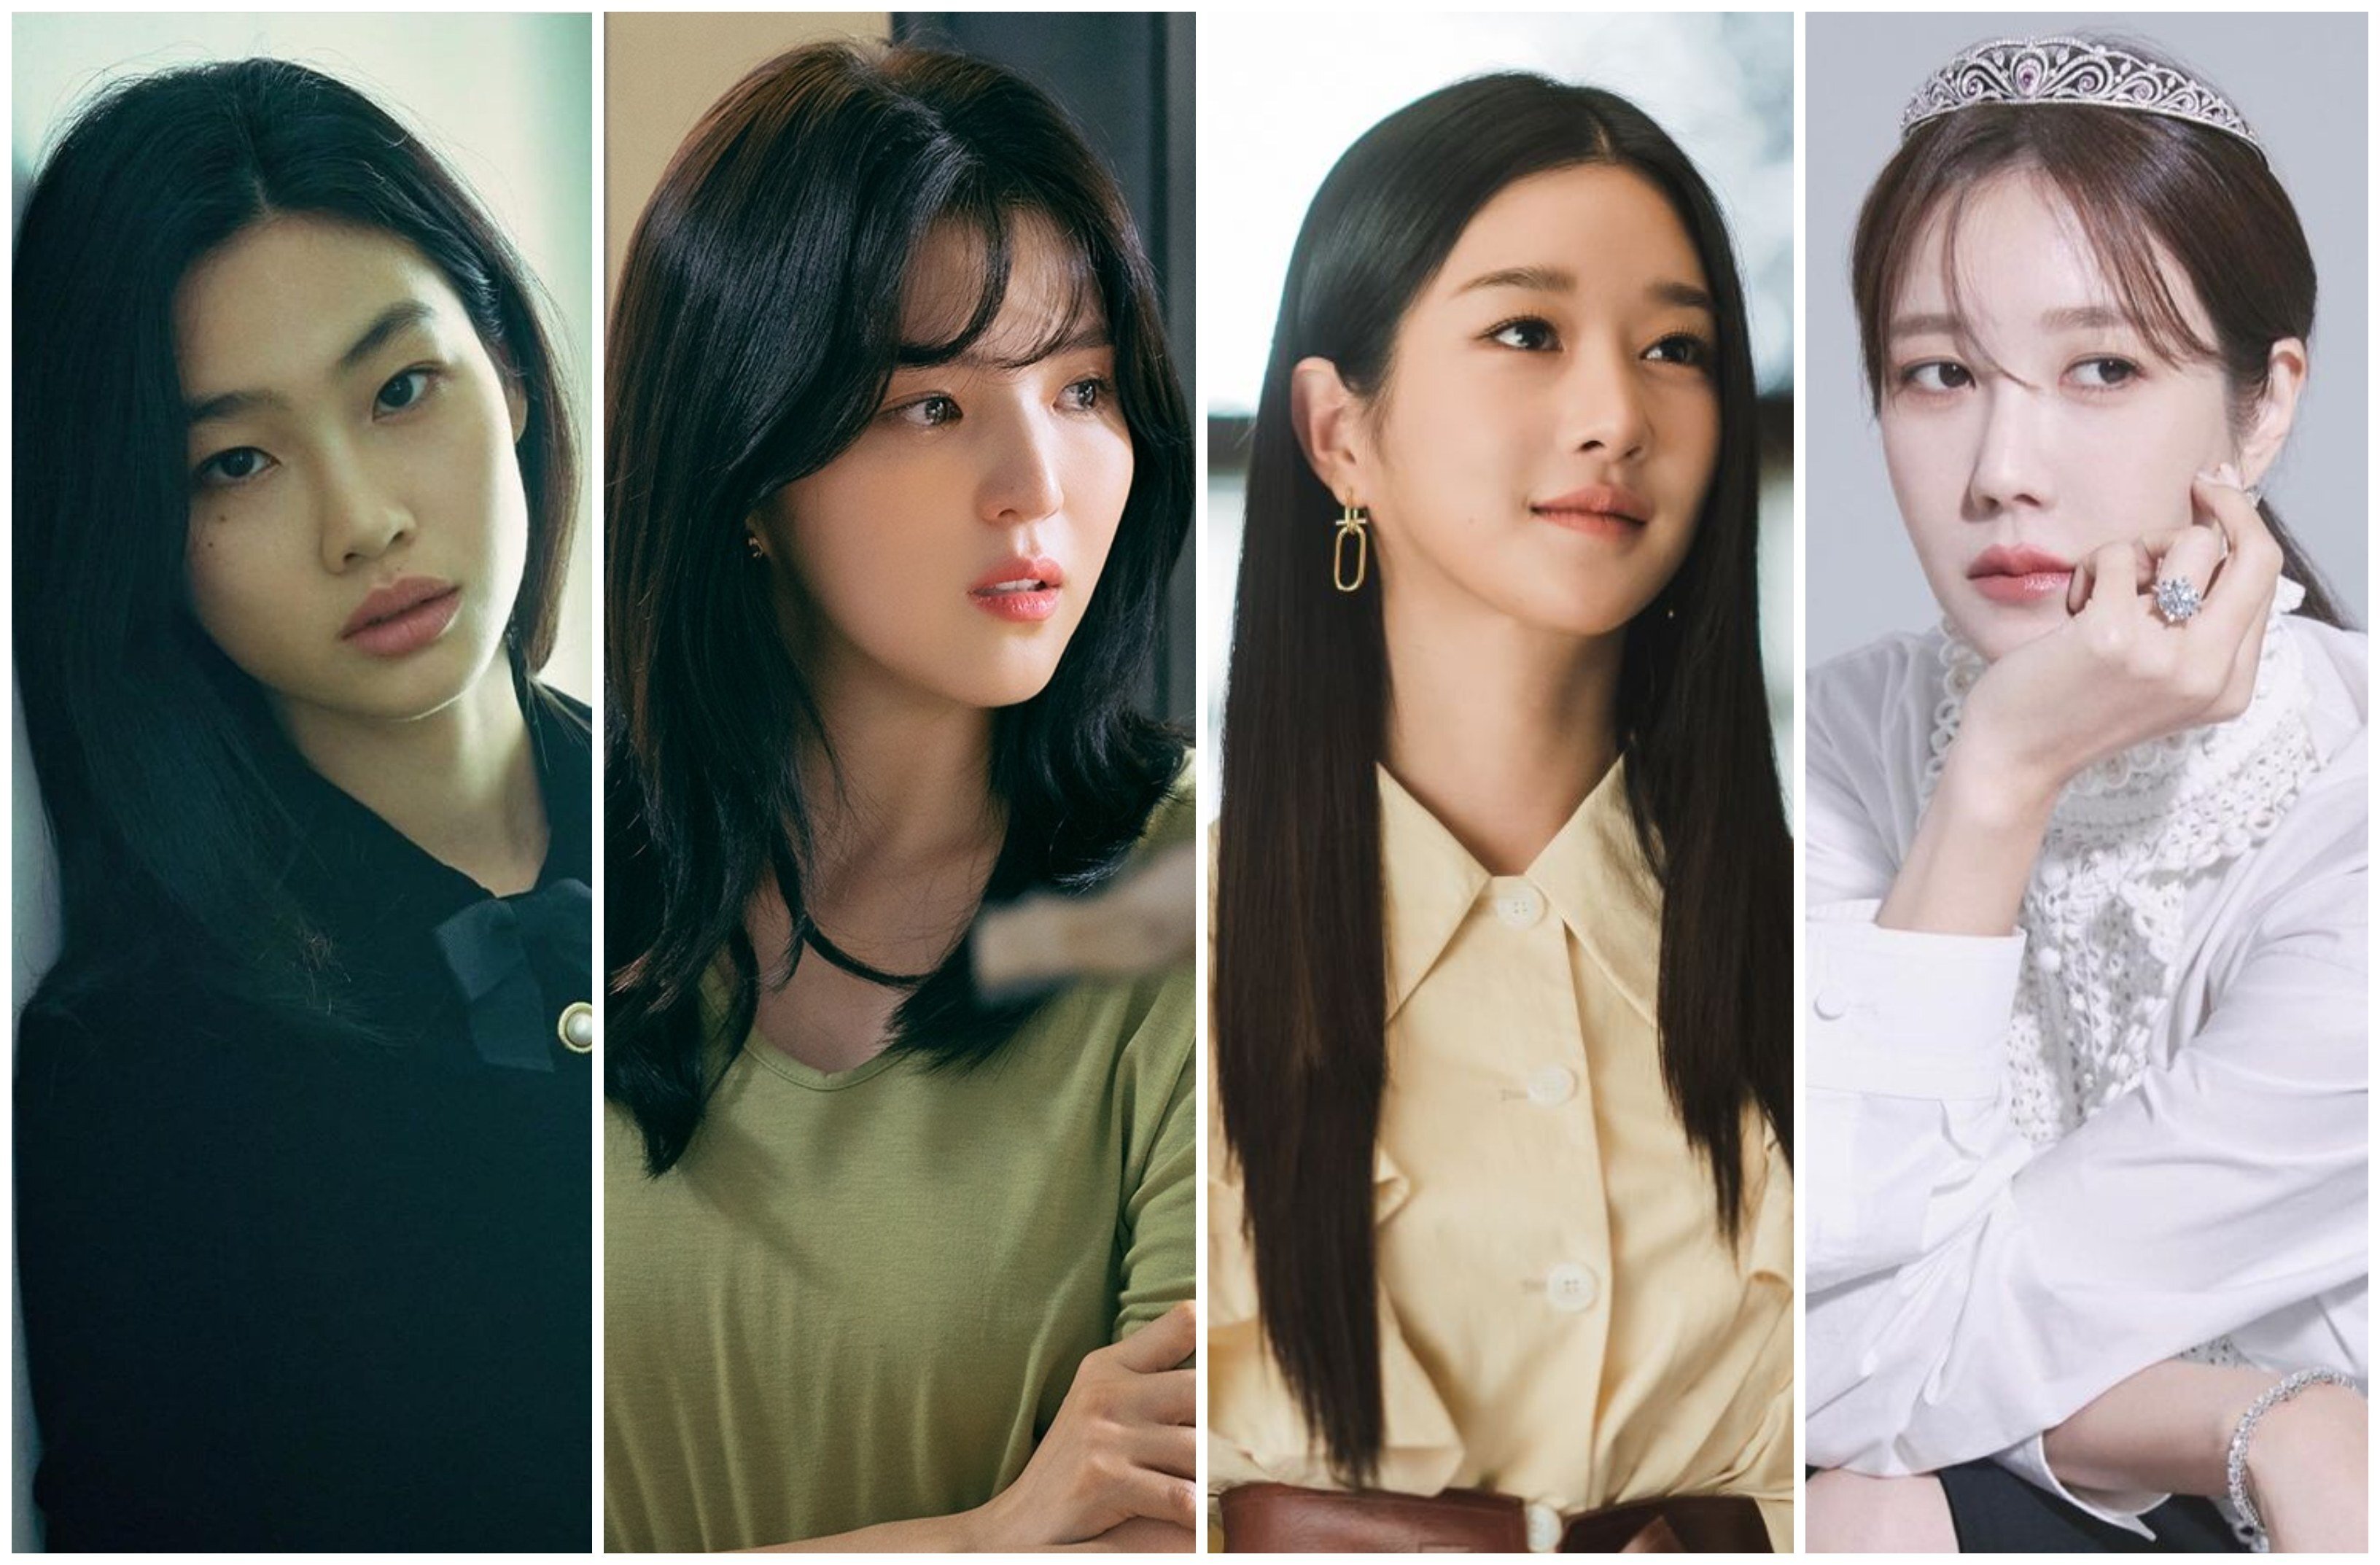 Jung Ho-yeon, Seo Ye-ji, Lee Ji-ah and Han So-hee all rose to fame overnight with successful K-drama roles. Photos: Netflix, TVN, @e.jiah/Instagram